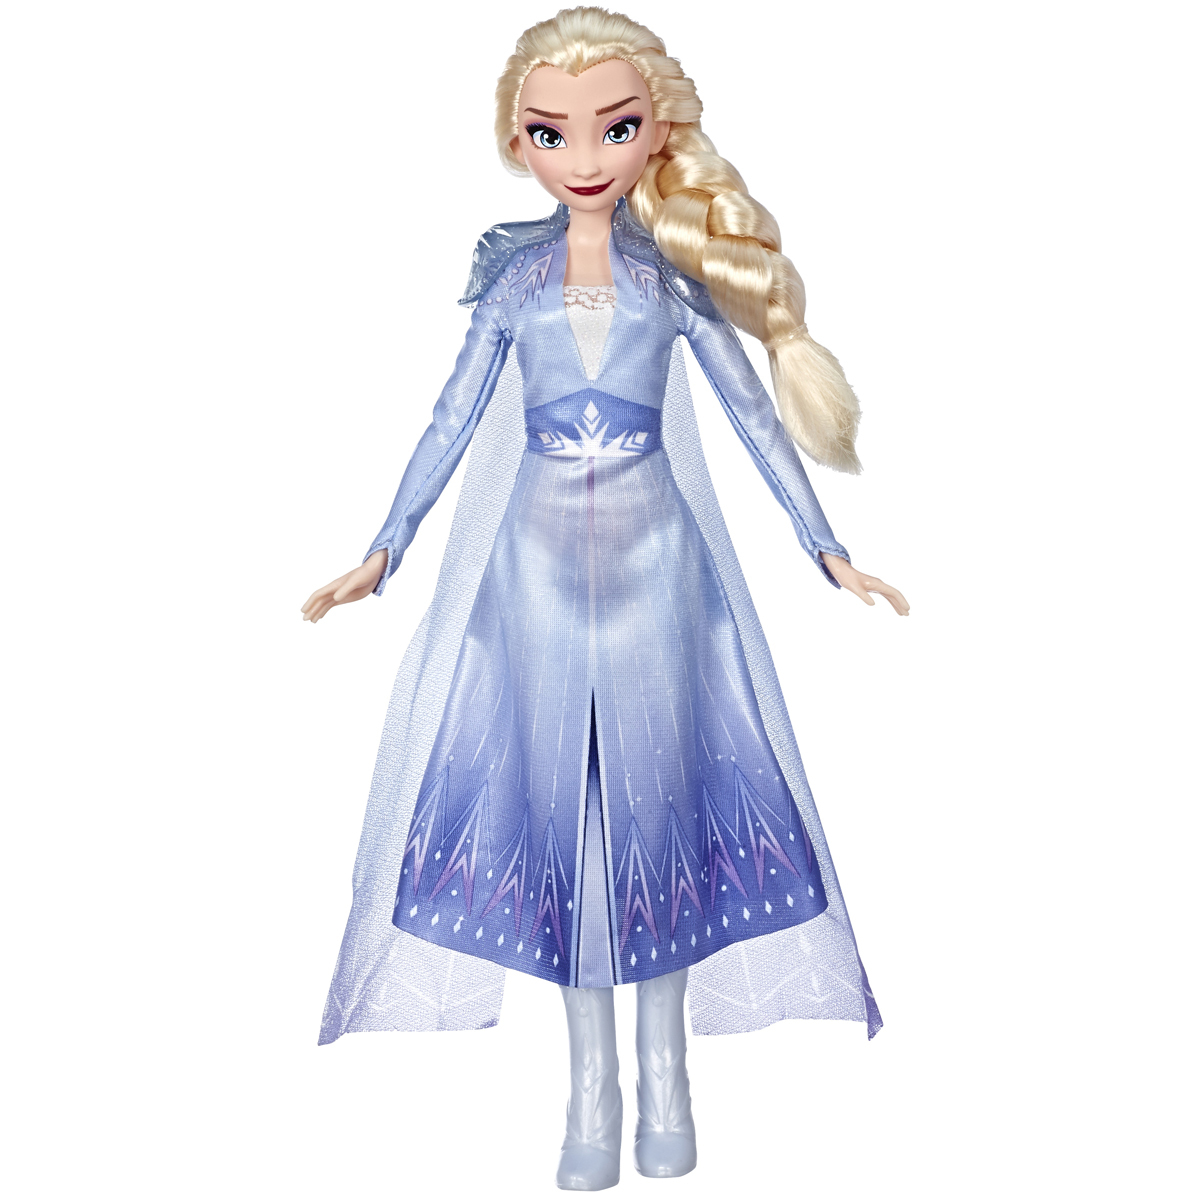 Frozen 2 Elsa Magic Discovery Interactive Doll